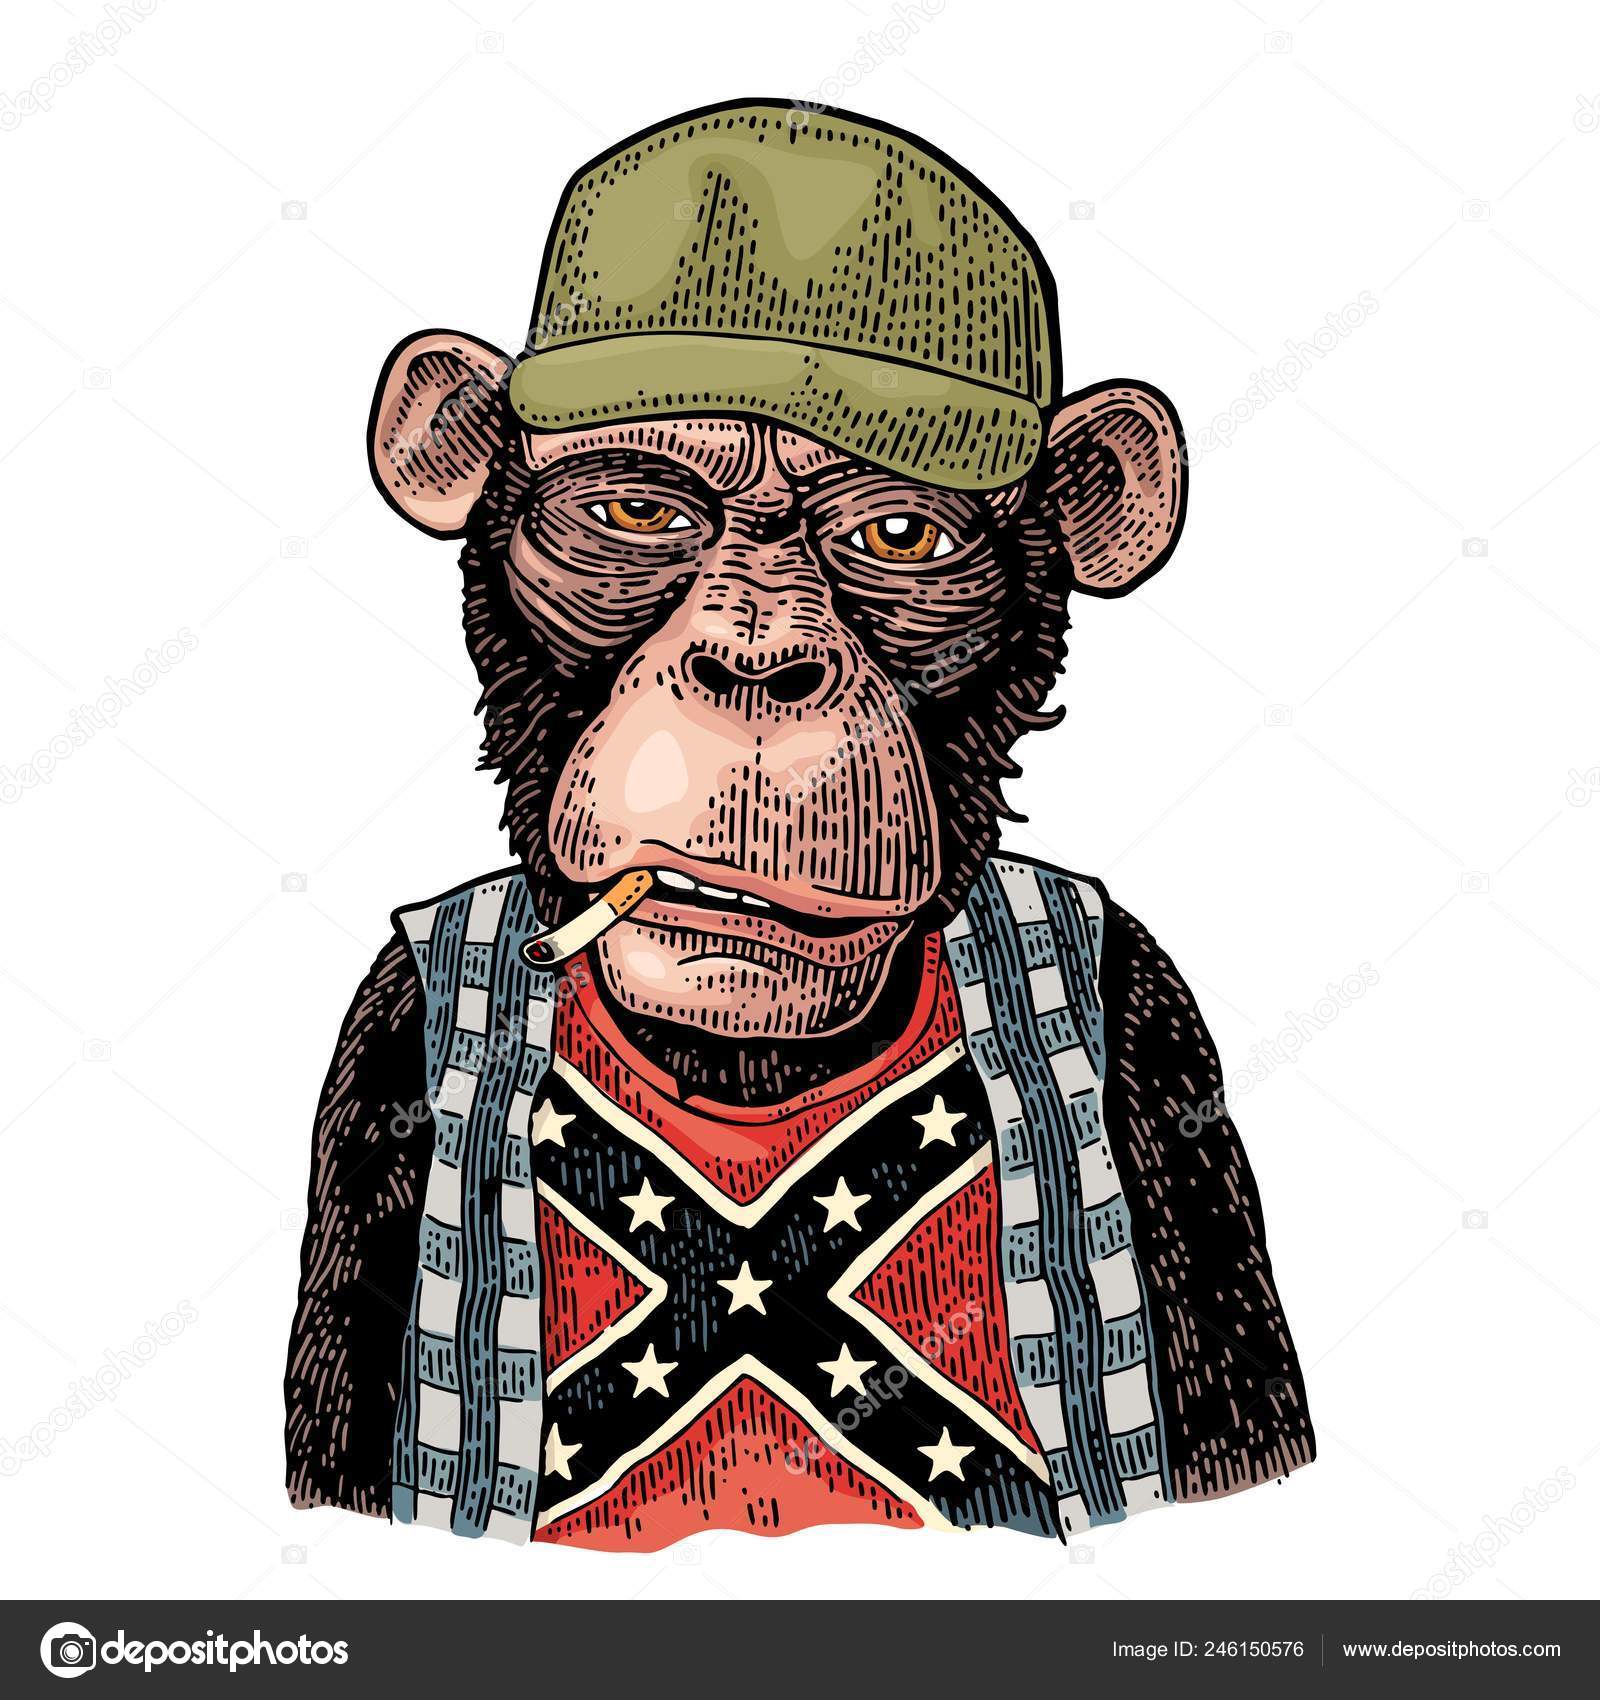 depositphotos_246150576-stock-illustration-monkey-redneck-in-trucker-cap.jpg